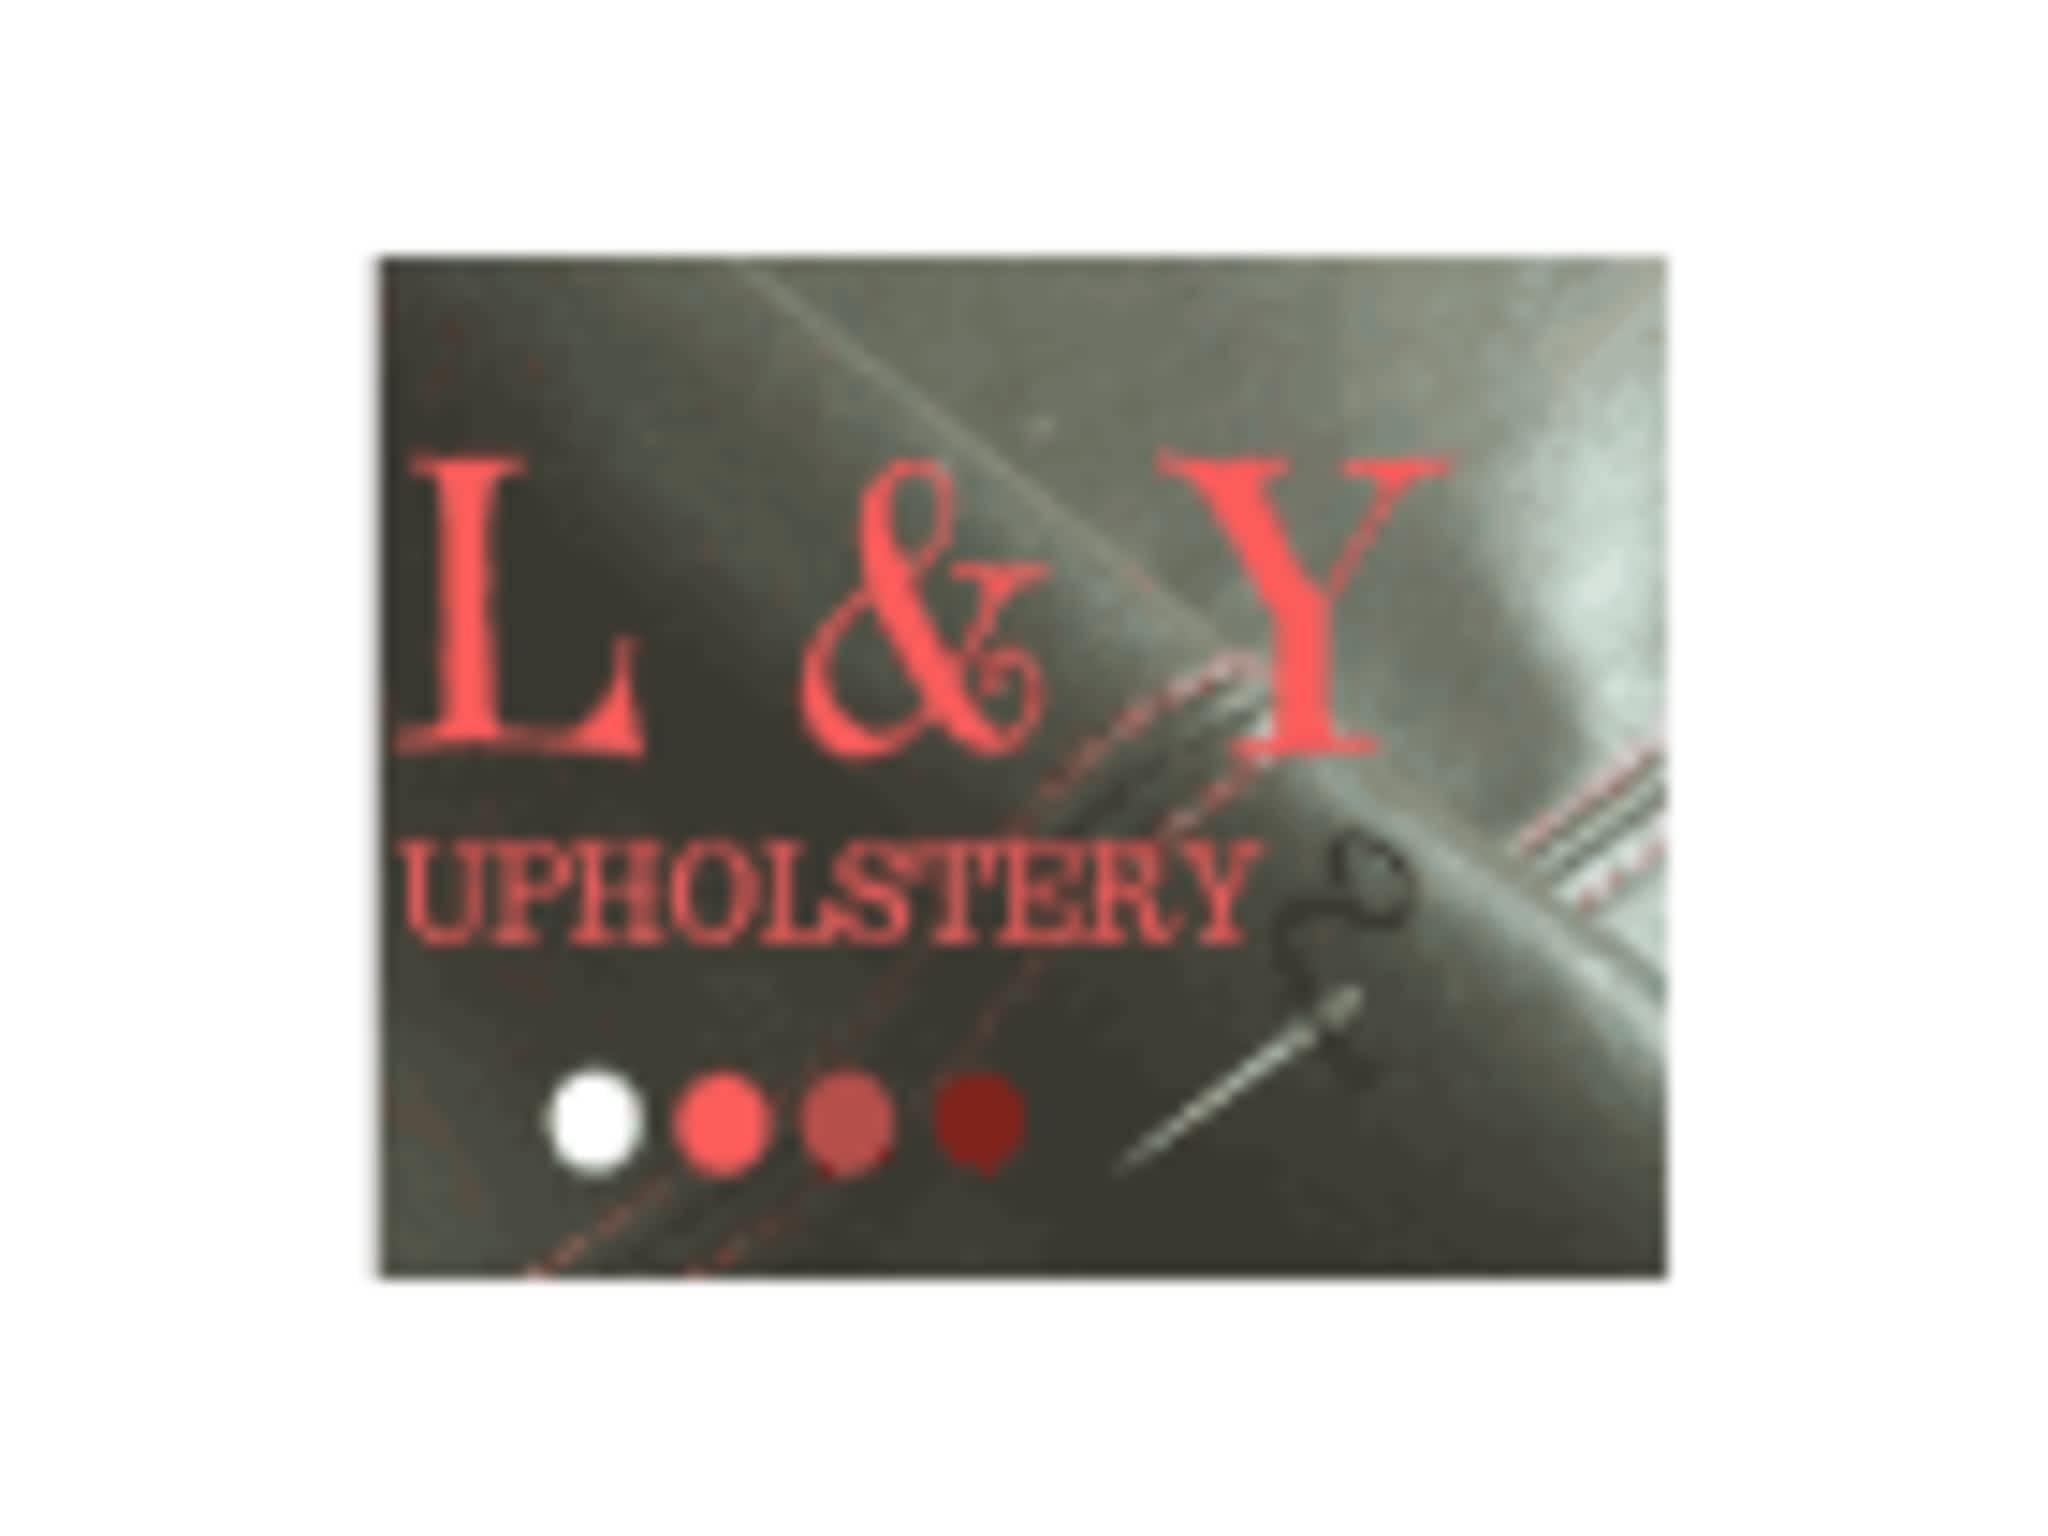 photo L&Y Upholstery Ltd